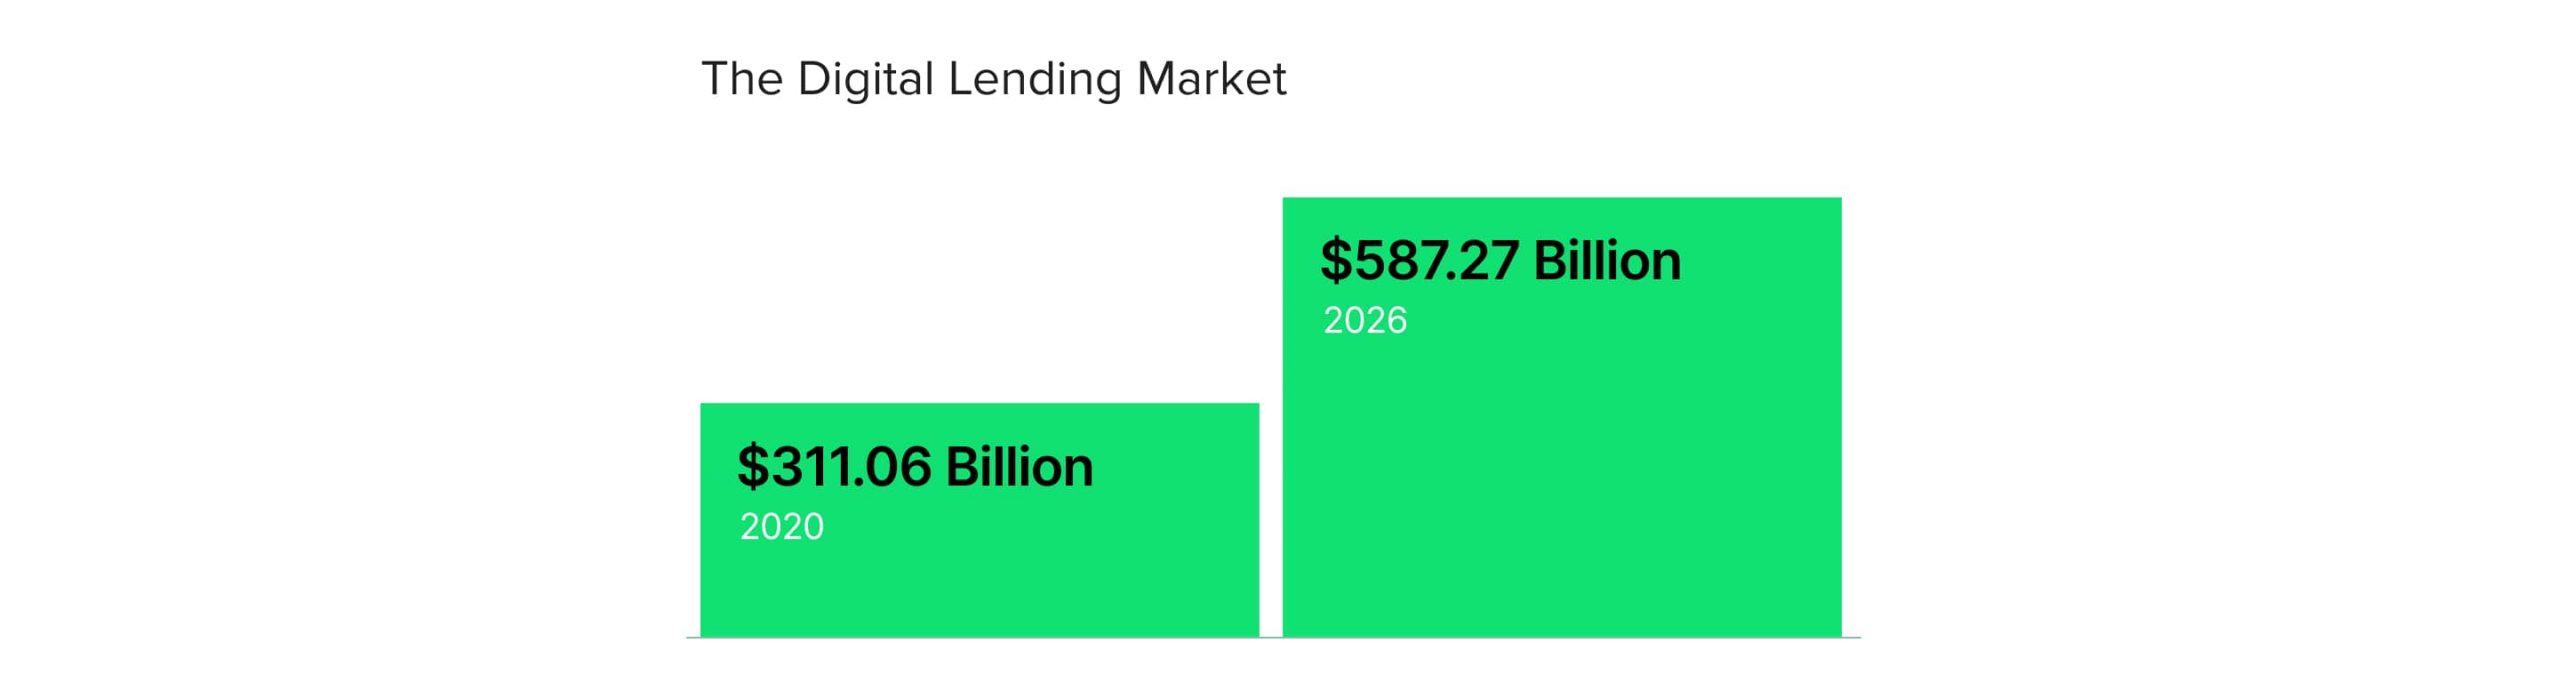 The digital lending market growth